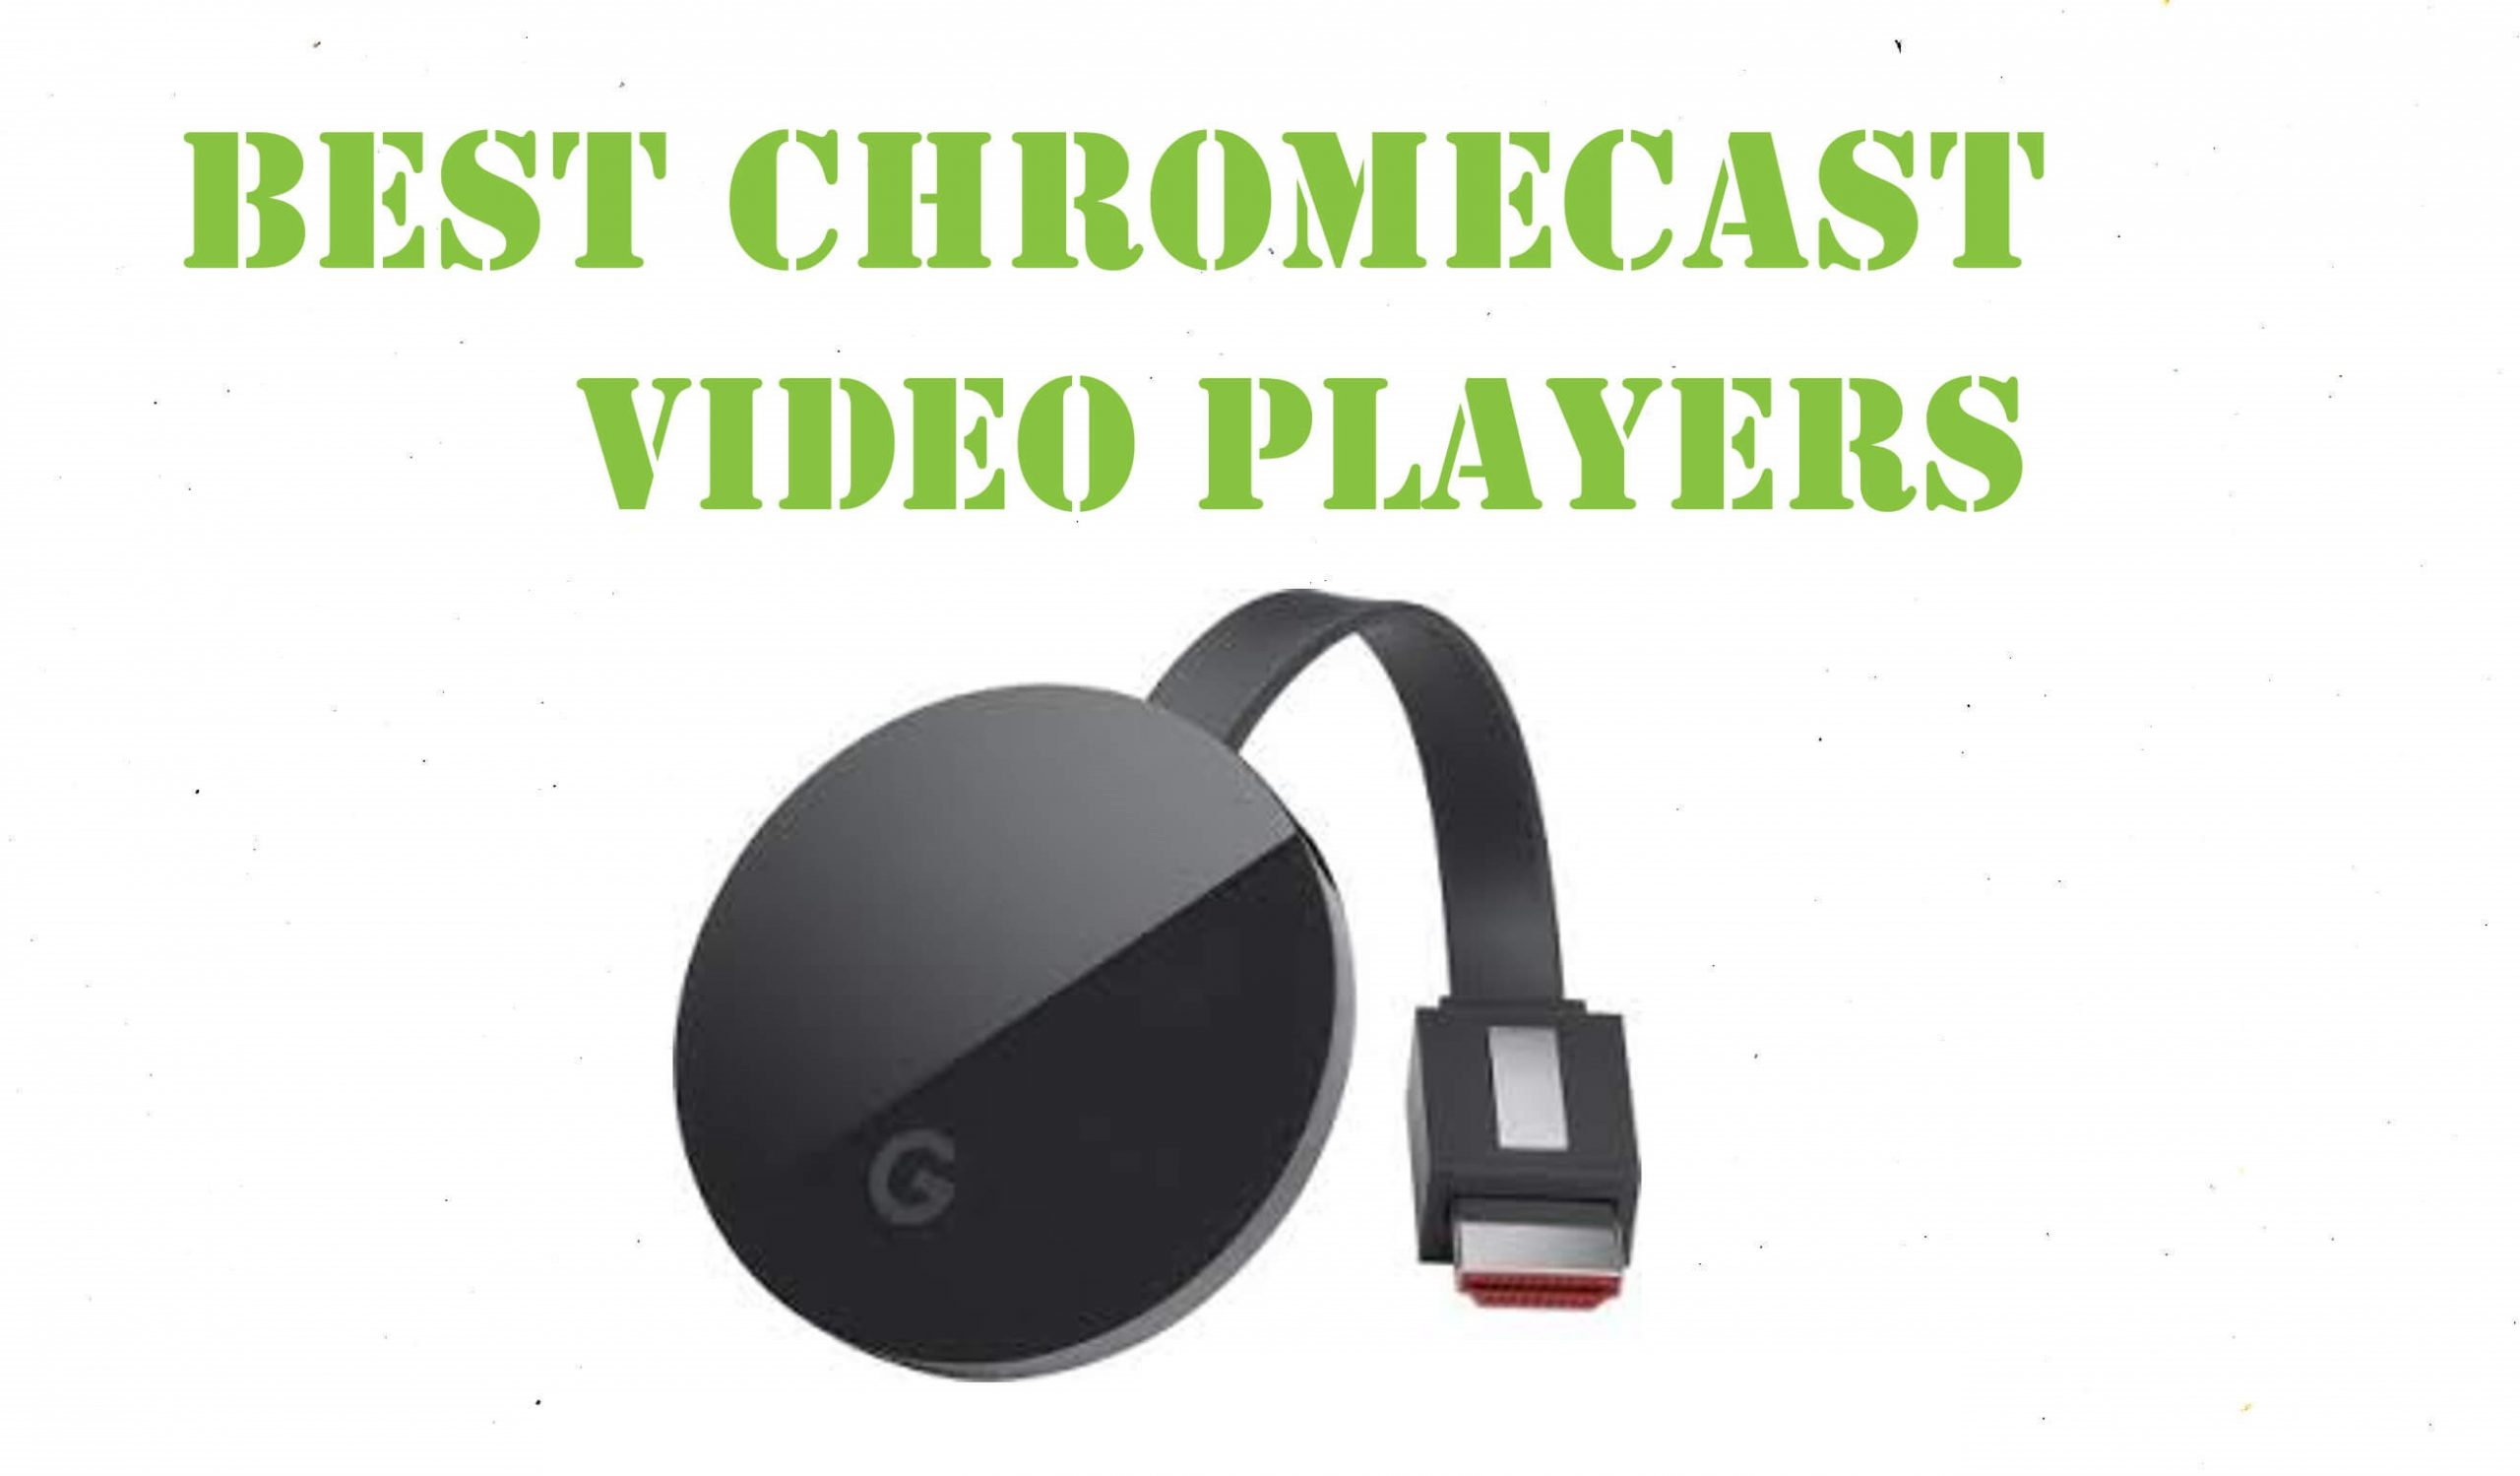 mac dvd player chromecast